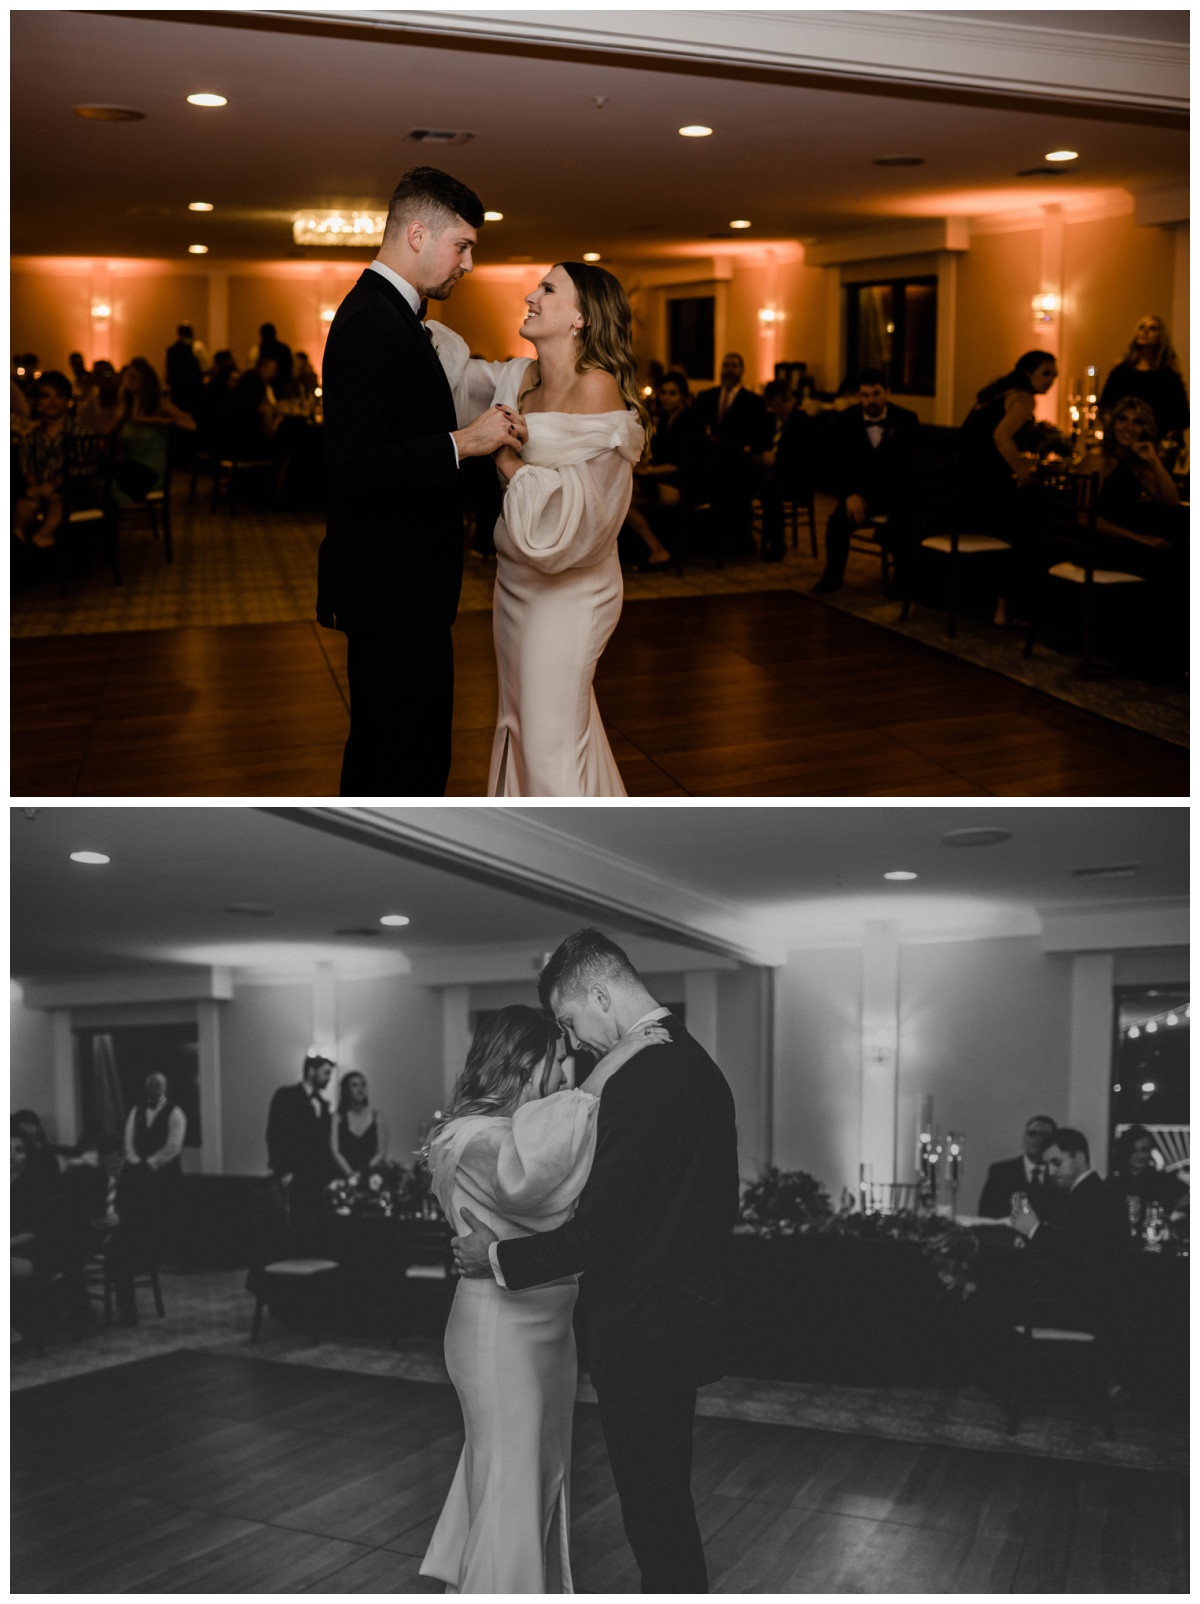 bride and groom share first dance in Florida resort ballroom wedding reception